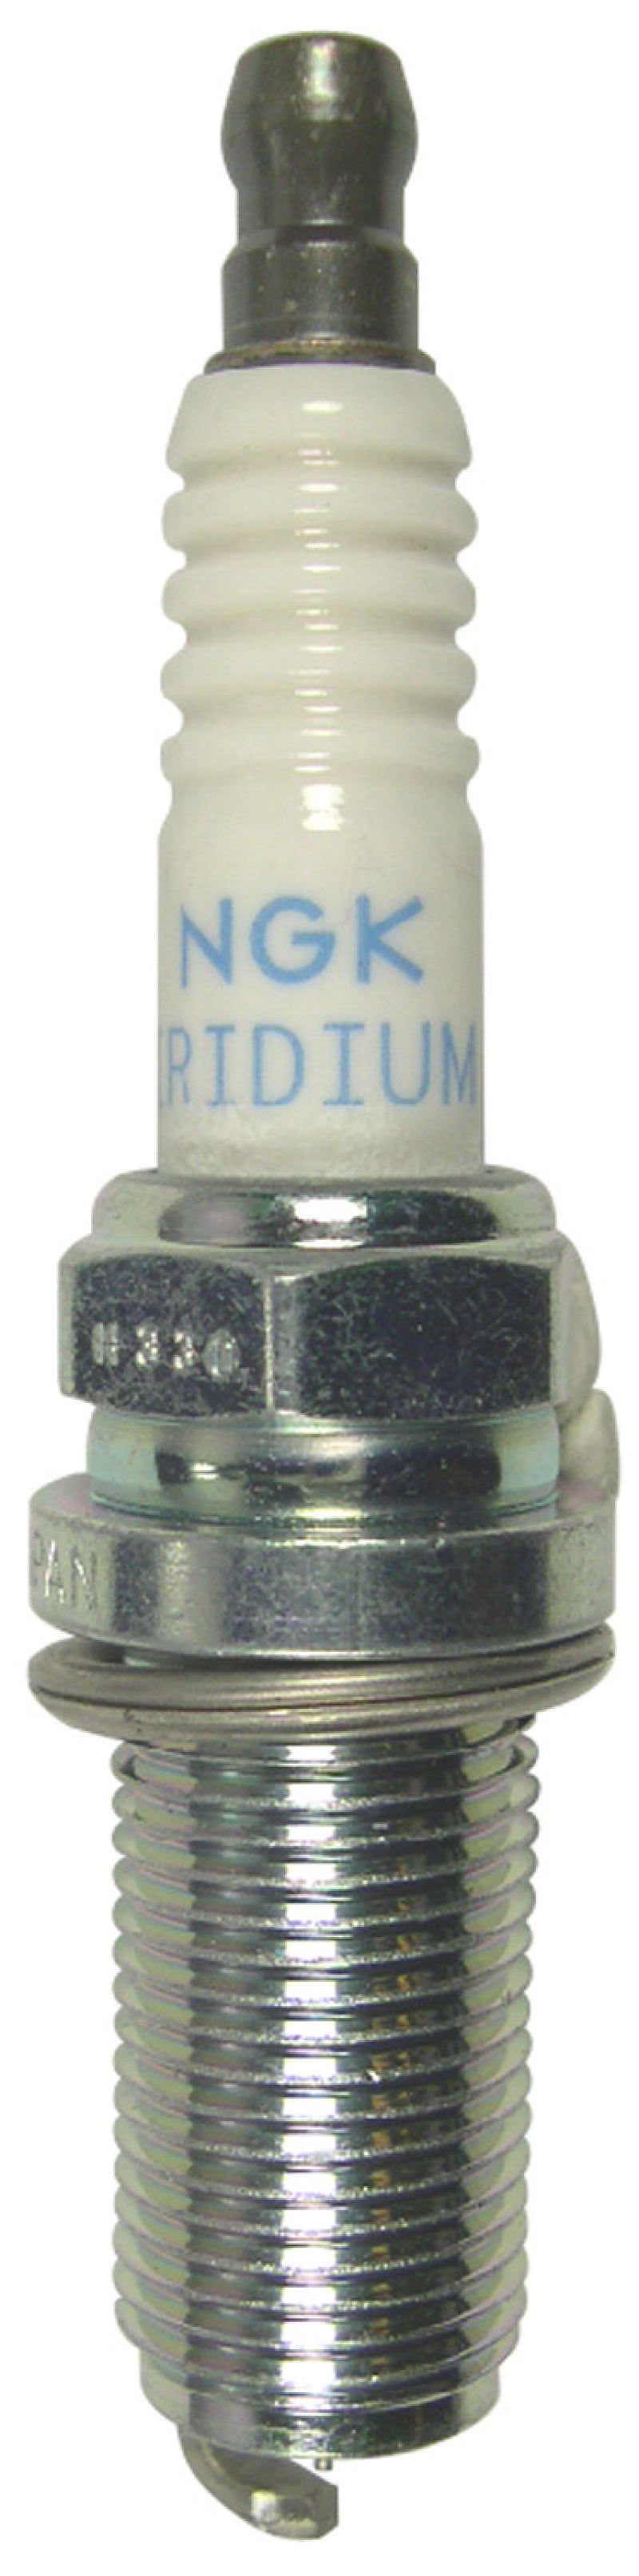 NGK Iridium Racing Spark Plug Box of 4 (R7437-8).